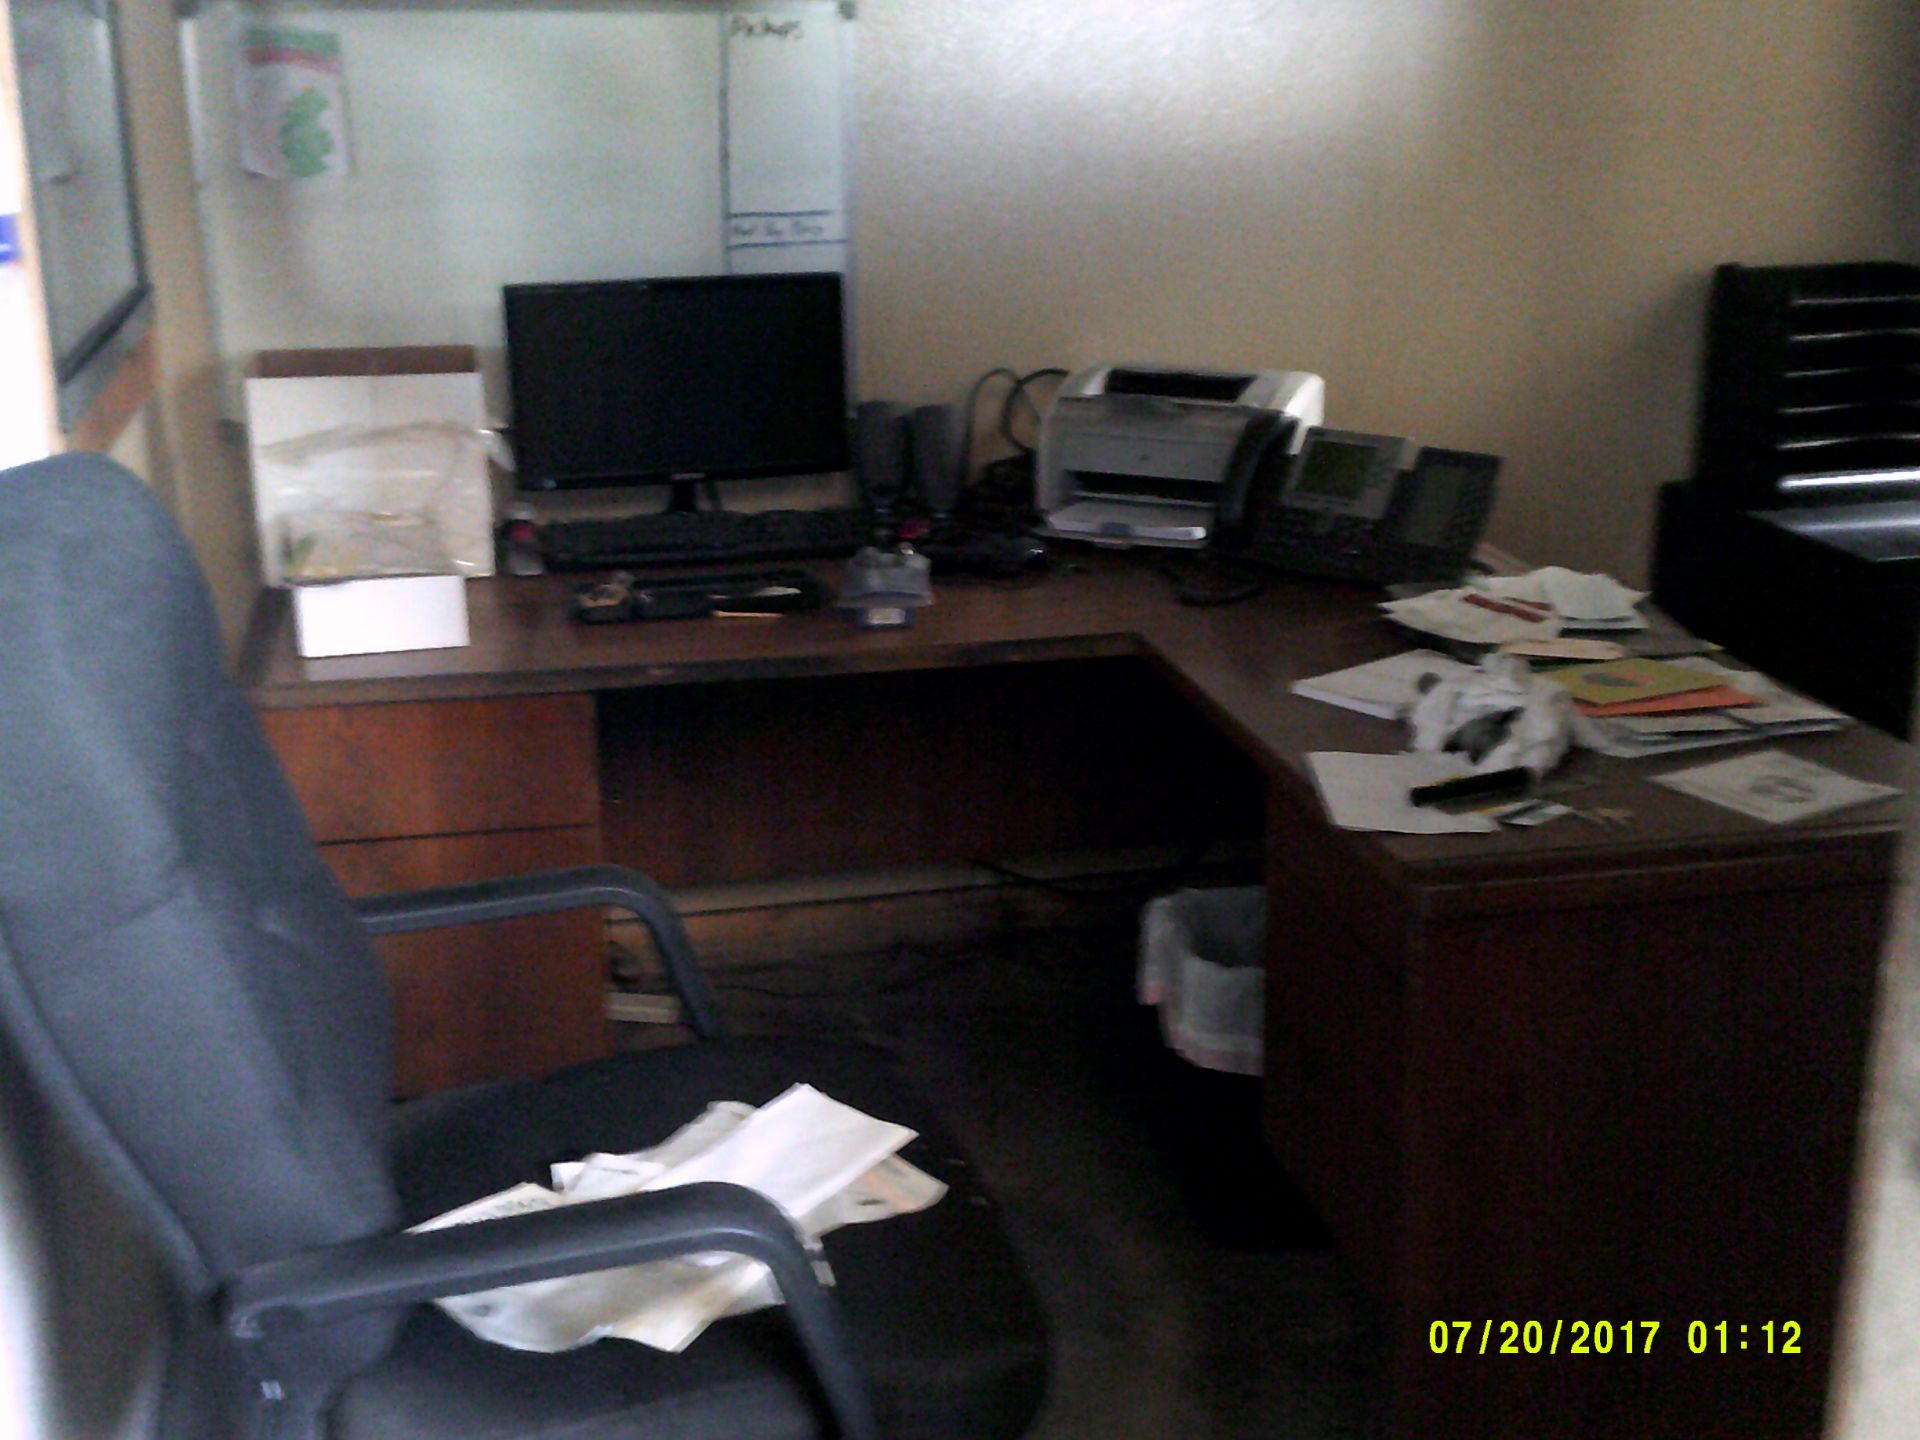 Office Lot